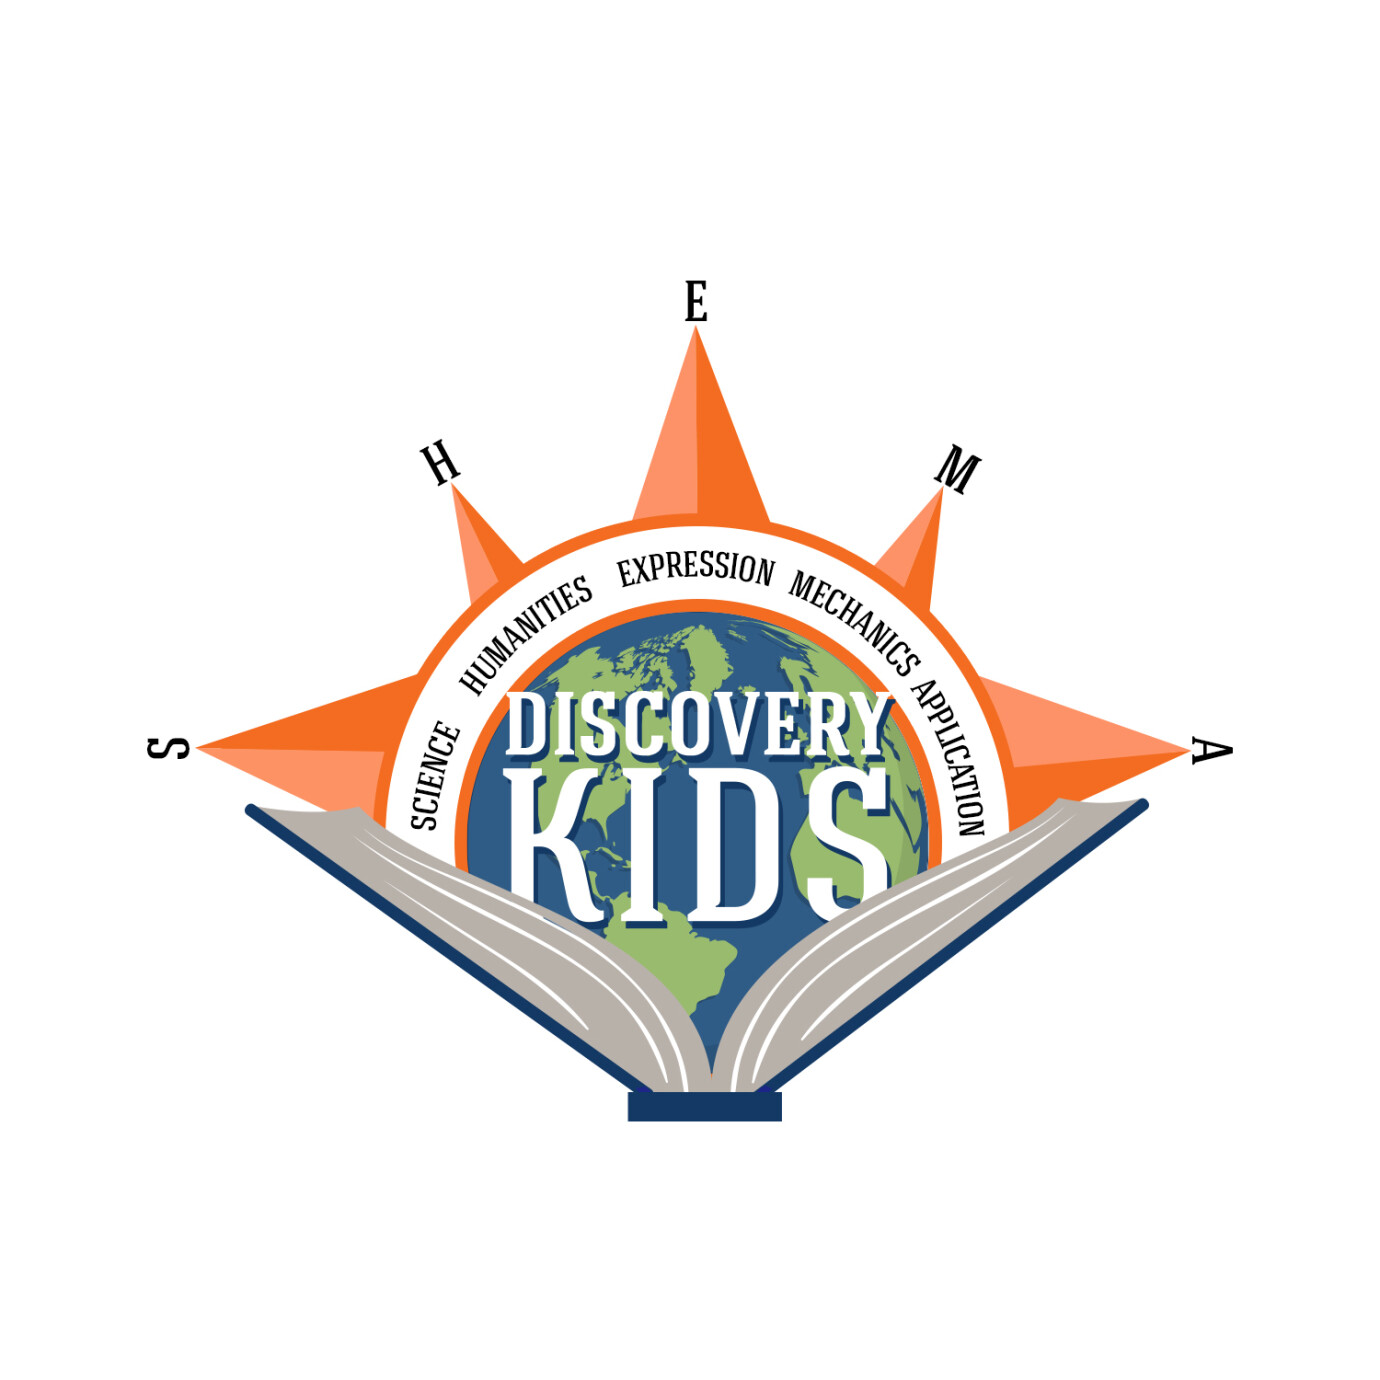 DISCOVERY KIDS: Wednesday Adventure